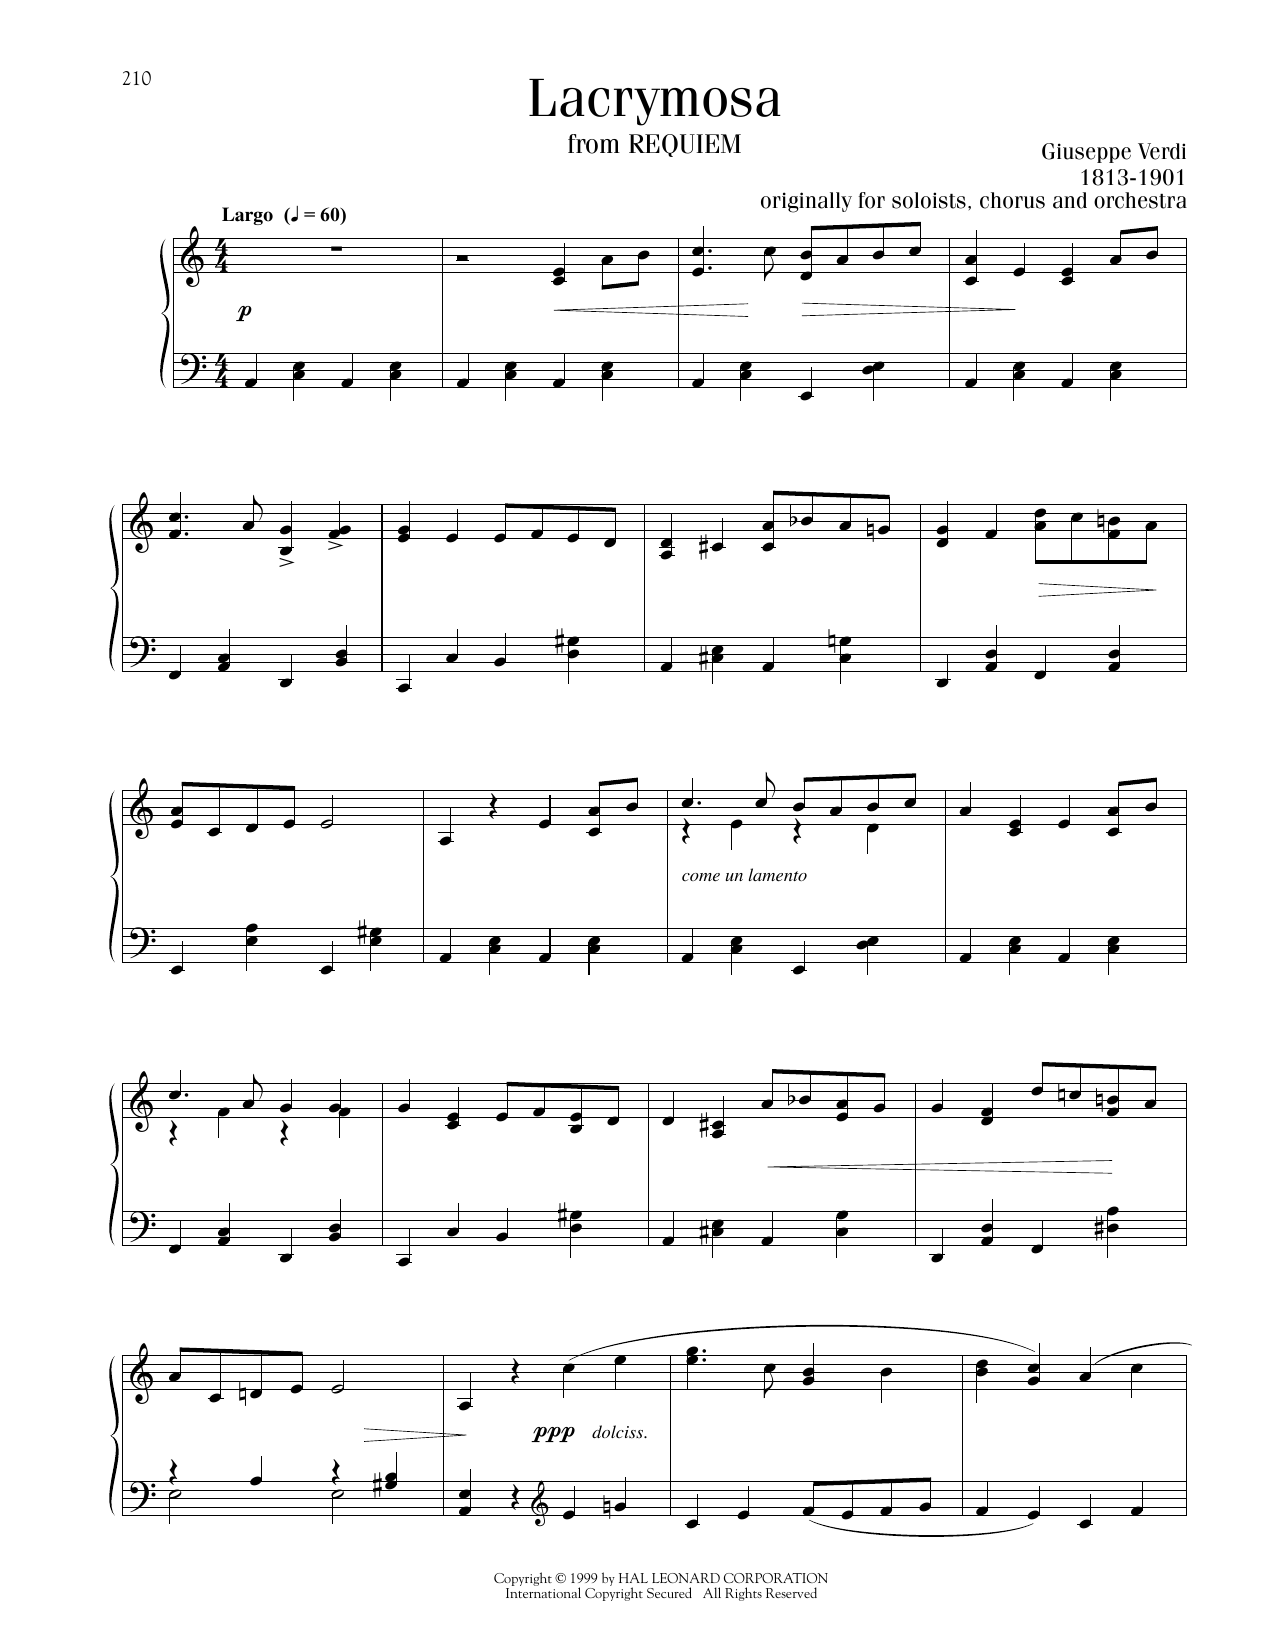 Giuseppe Verdi Lacrymosa sheet music notes printable PDF score